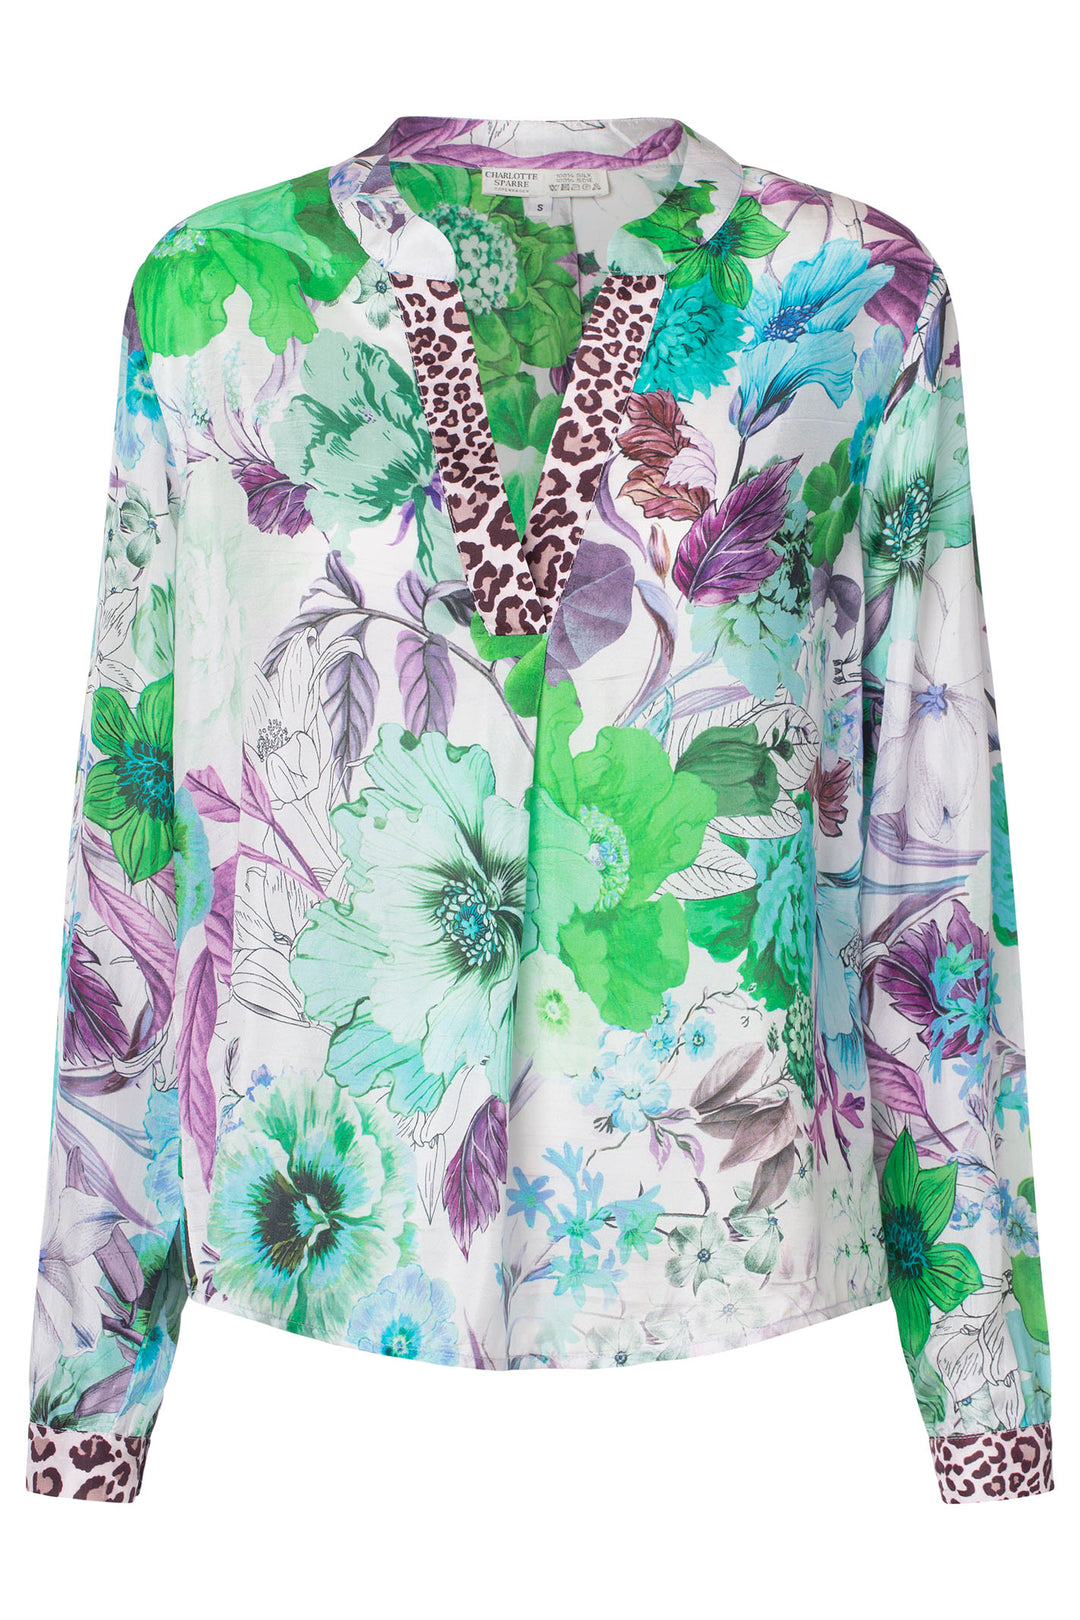 Charlotte Sparre 3171 Evy Mix Green Spark Floral Print Blouse - Olivia Grace Fashion